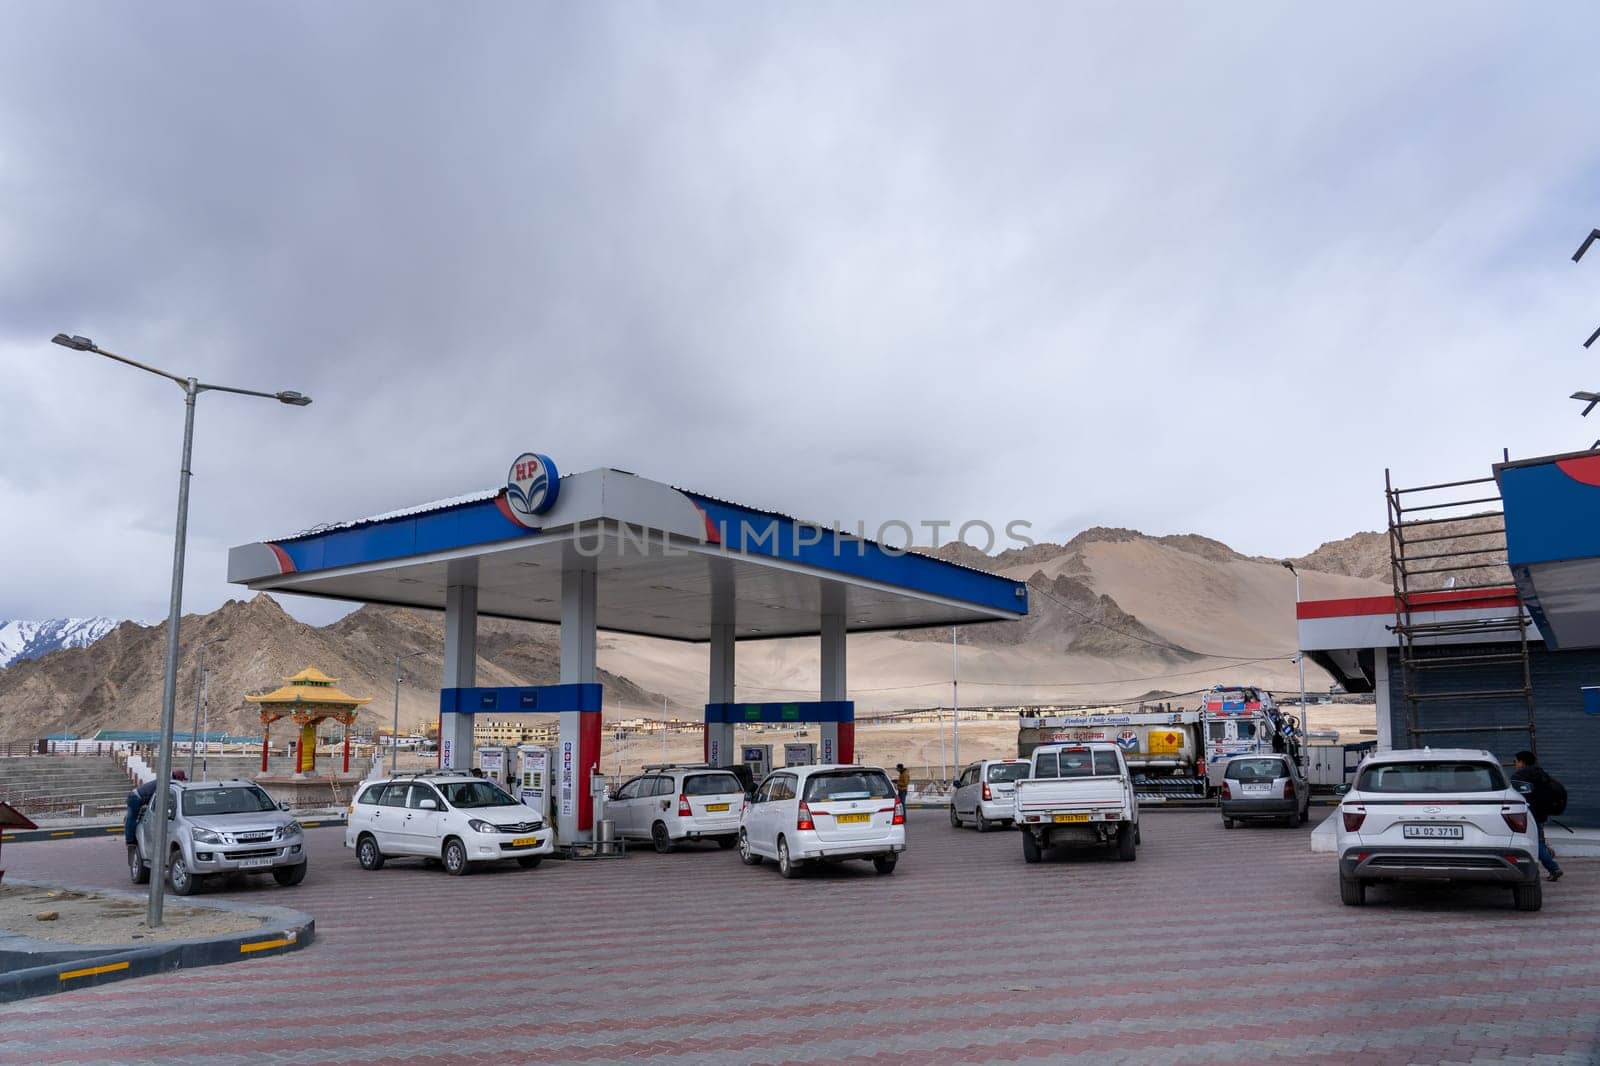 Fuel Station in Leh, India by oliverfoerstner